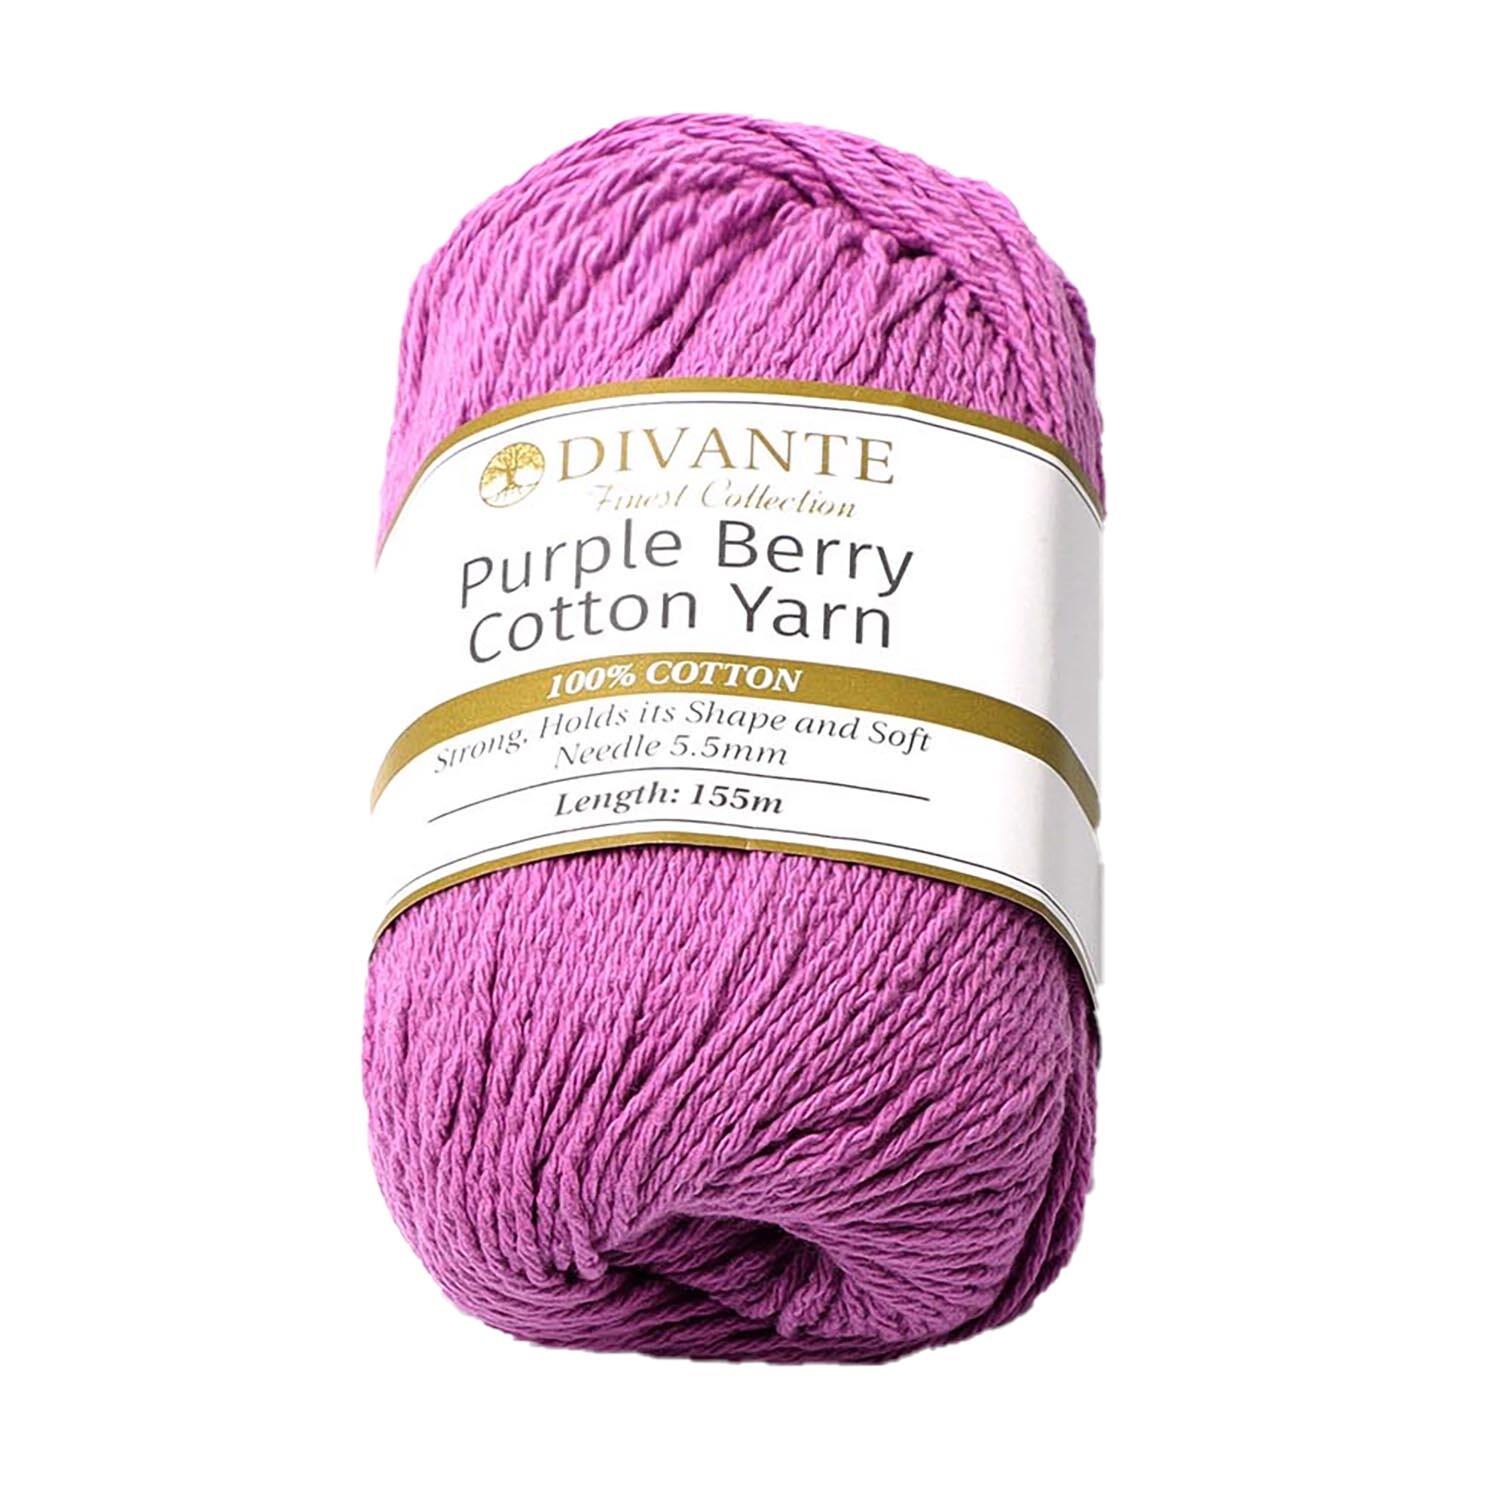 Divante Purple Berry Cotton Yarn 155m Image